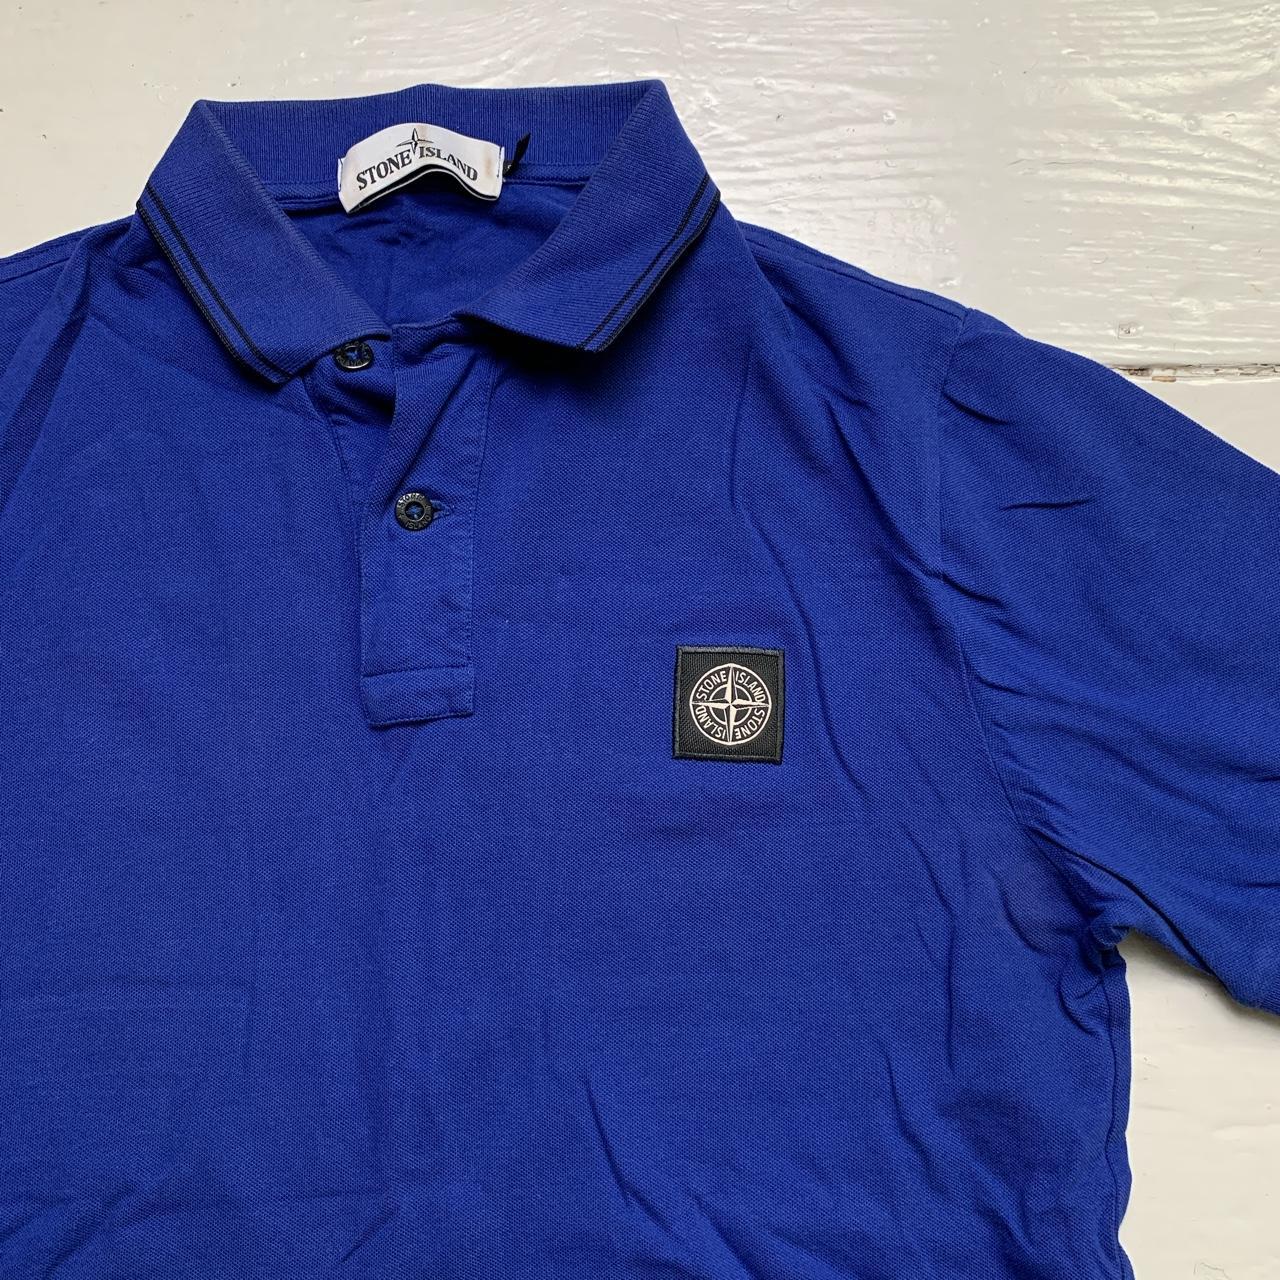 Stone Island Royal Blue Polo Shirt